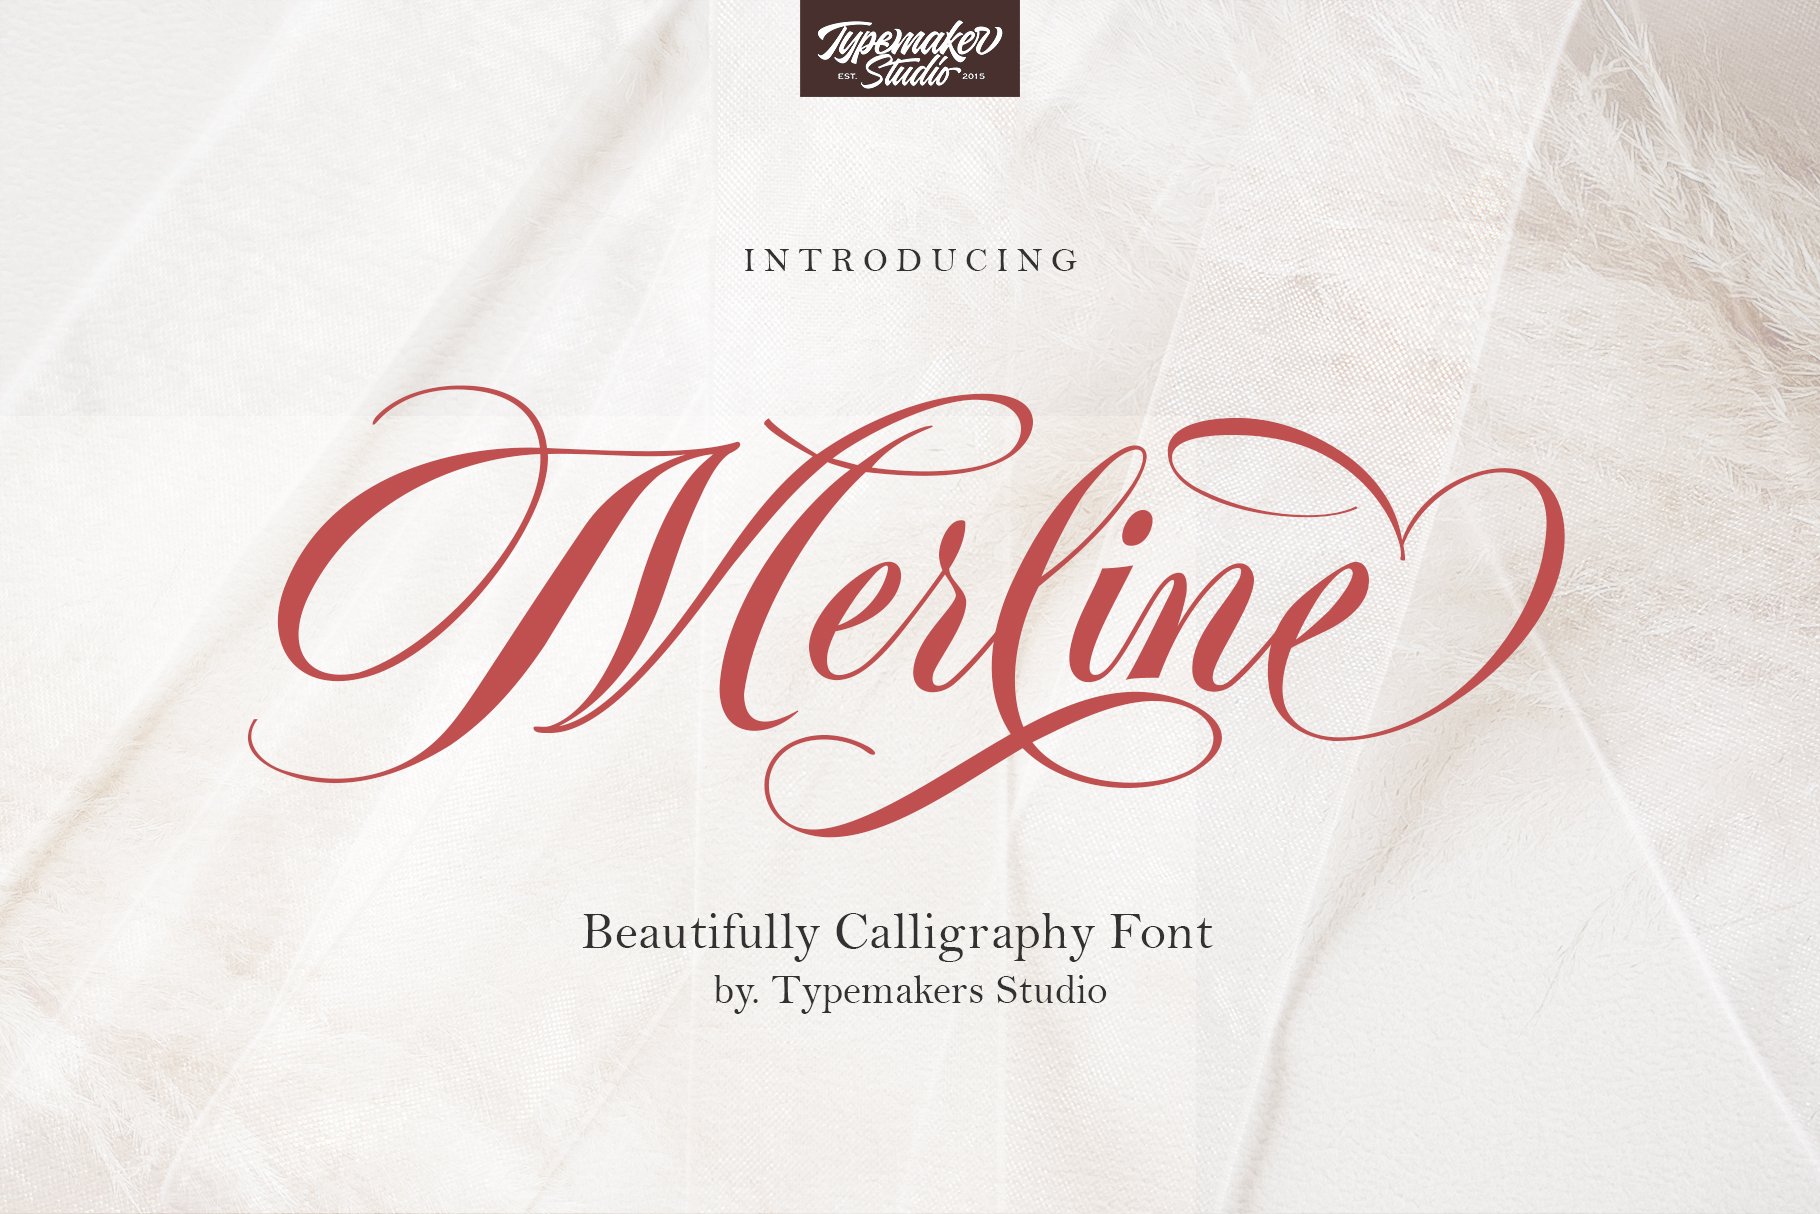 Merline Script cover image.